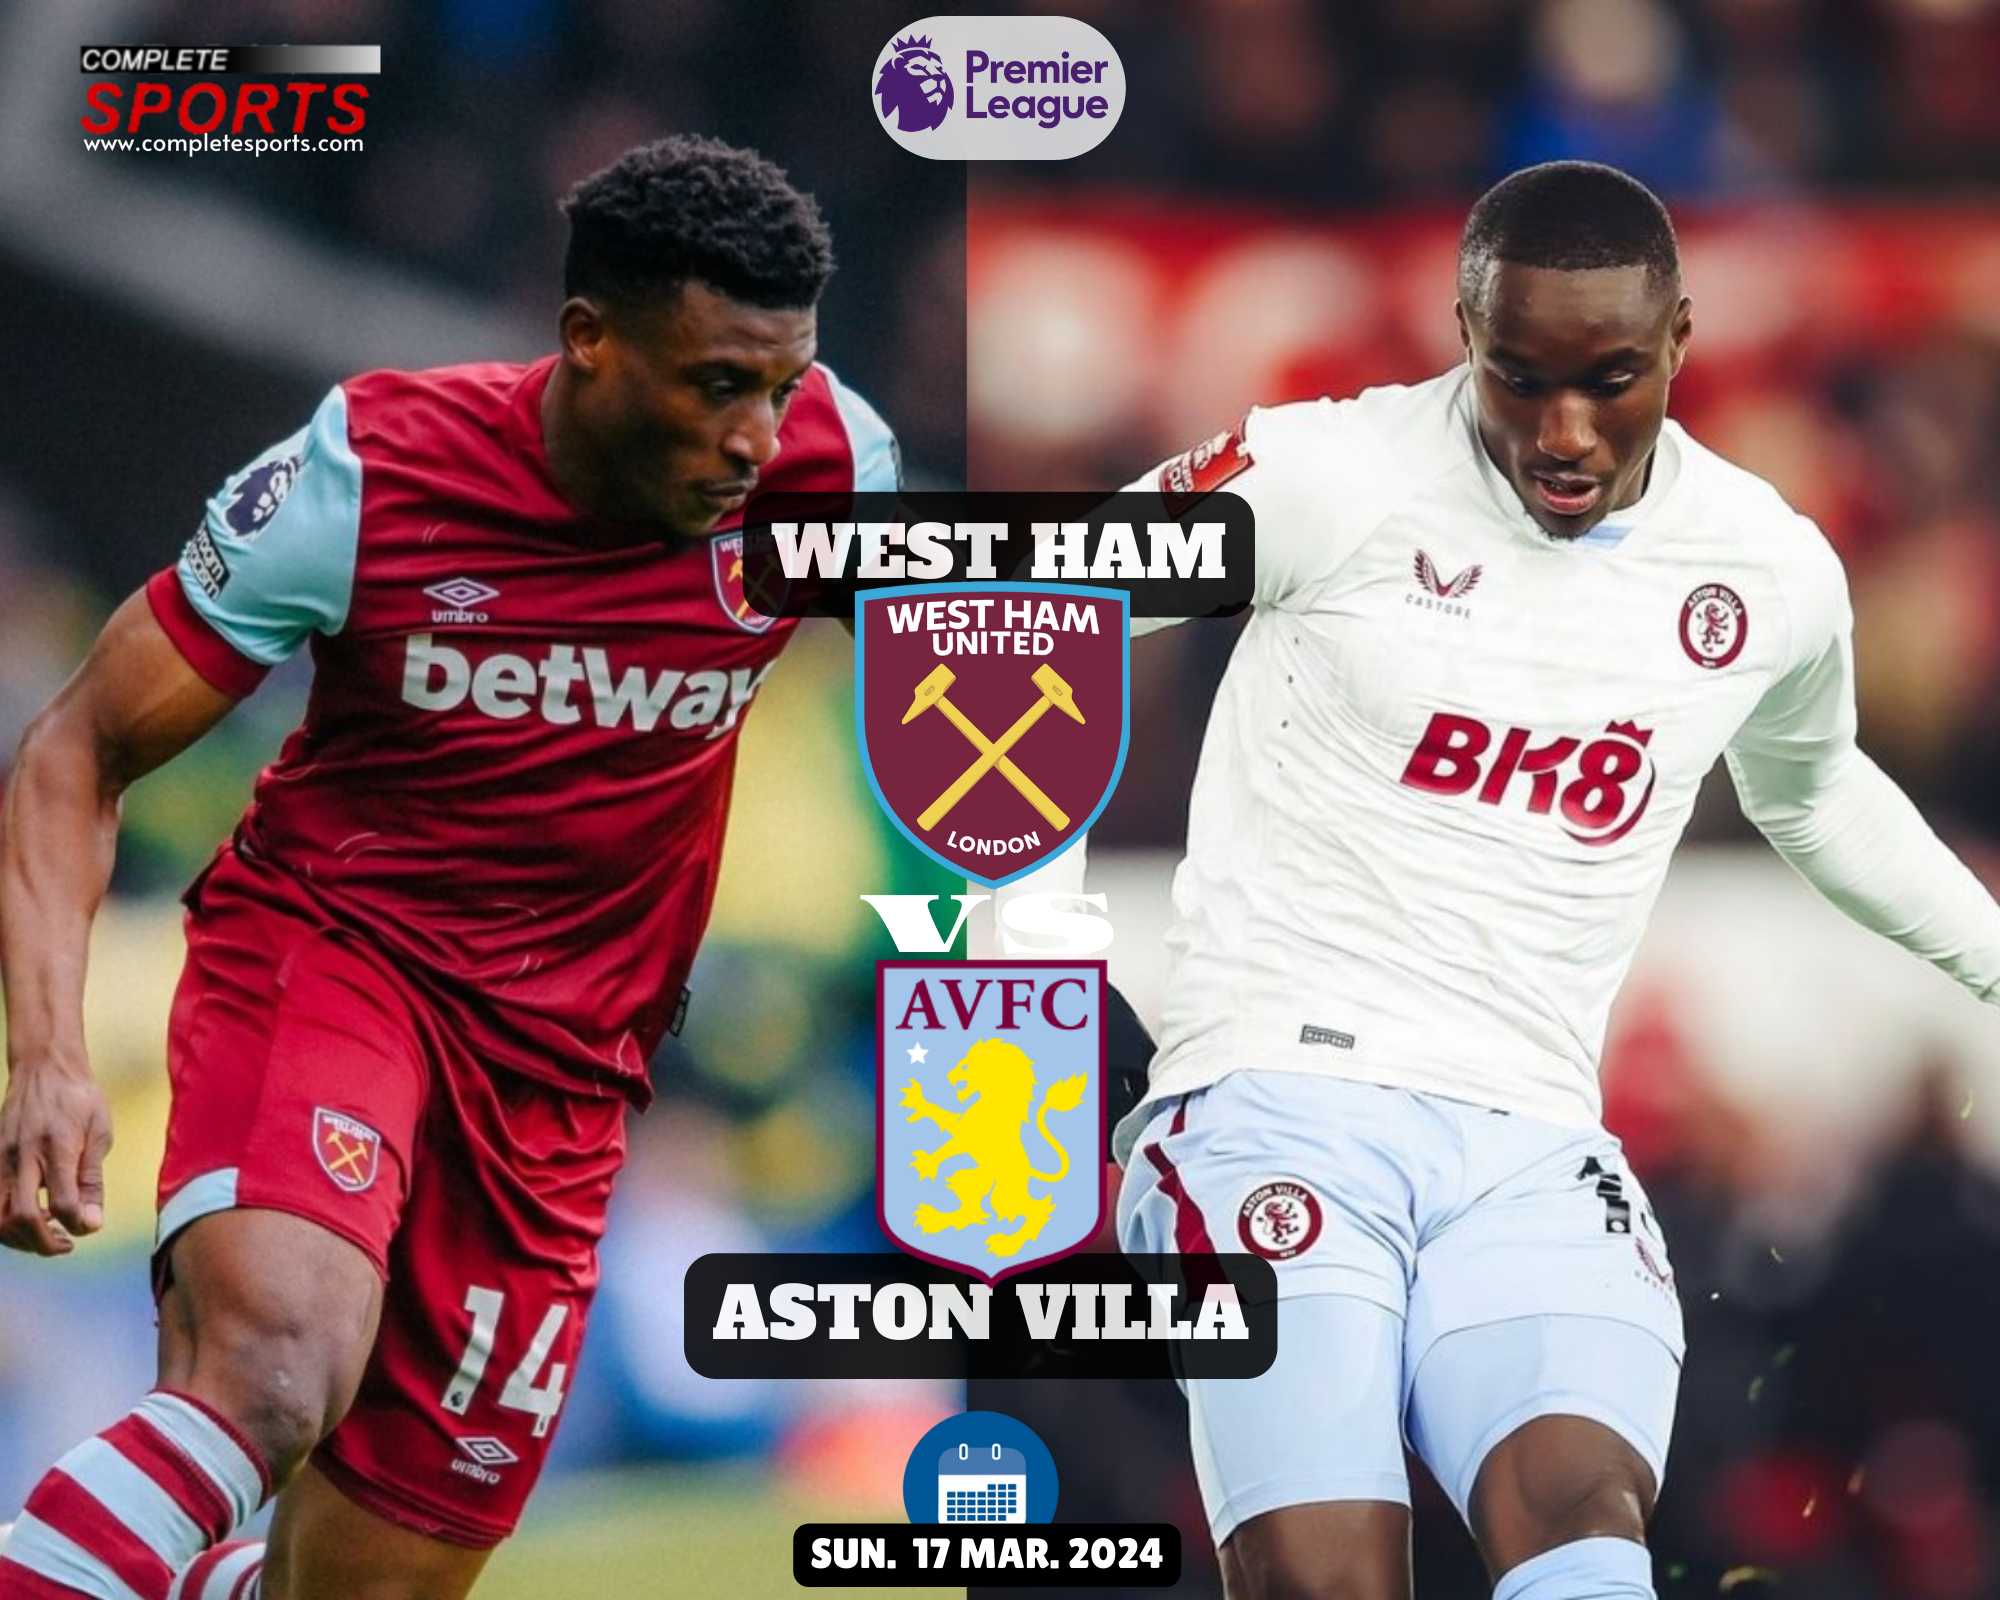 West Ham Vs Aston Villa: Predictions And Match Preview